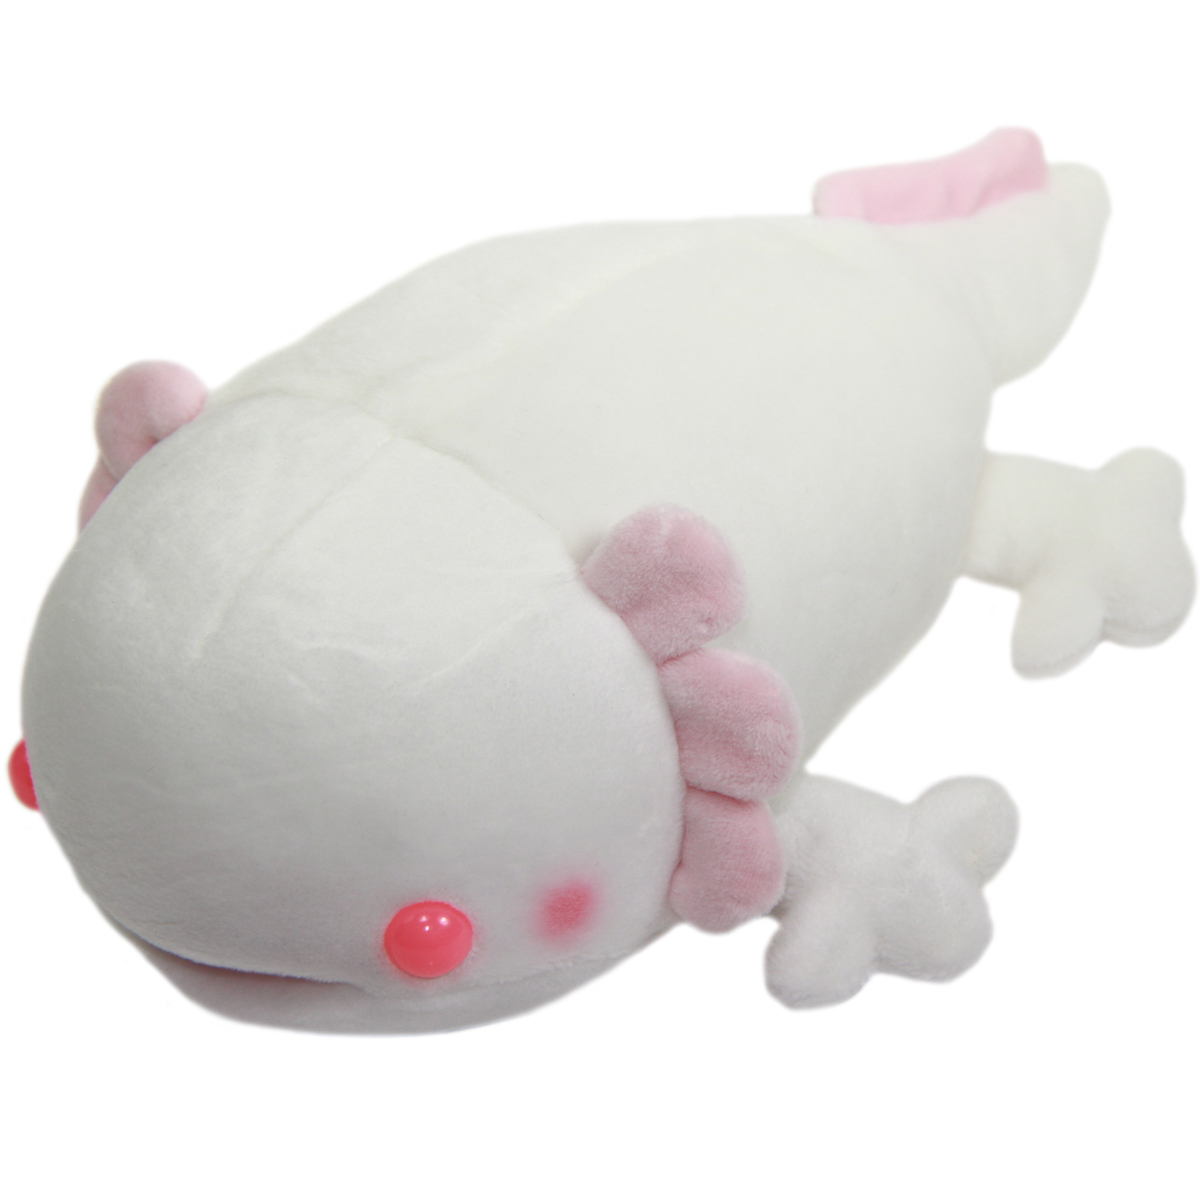 Axolotl Plush Toy Super Soft Stuffed Animal White Pink